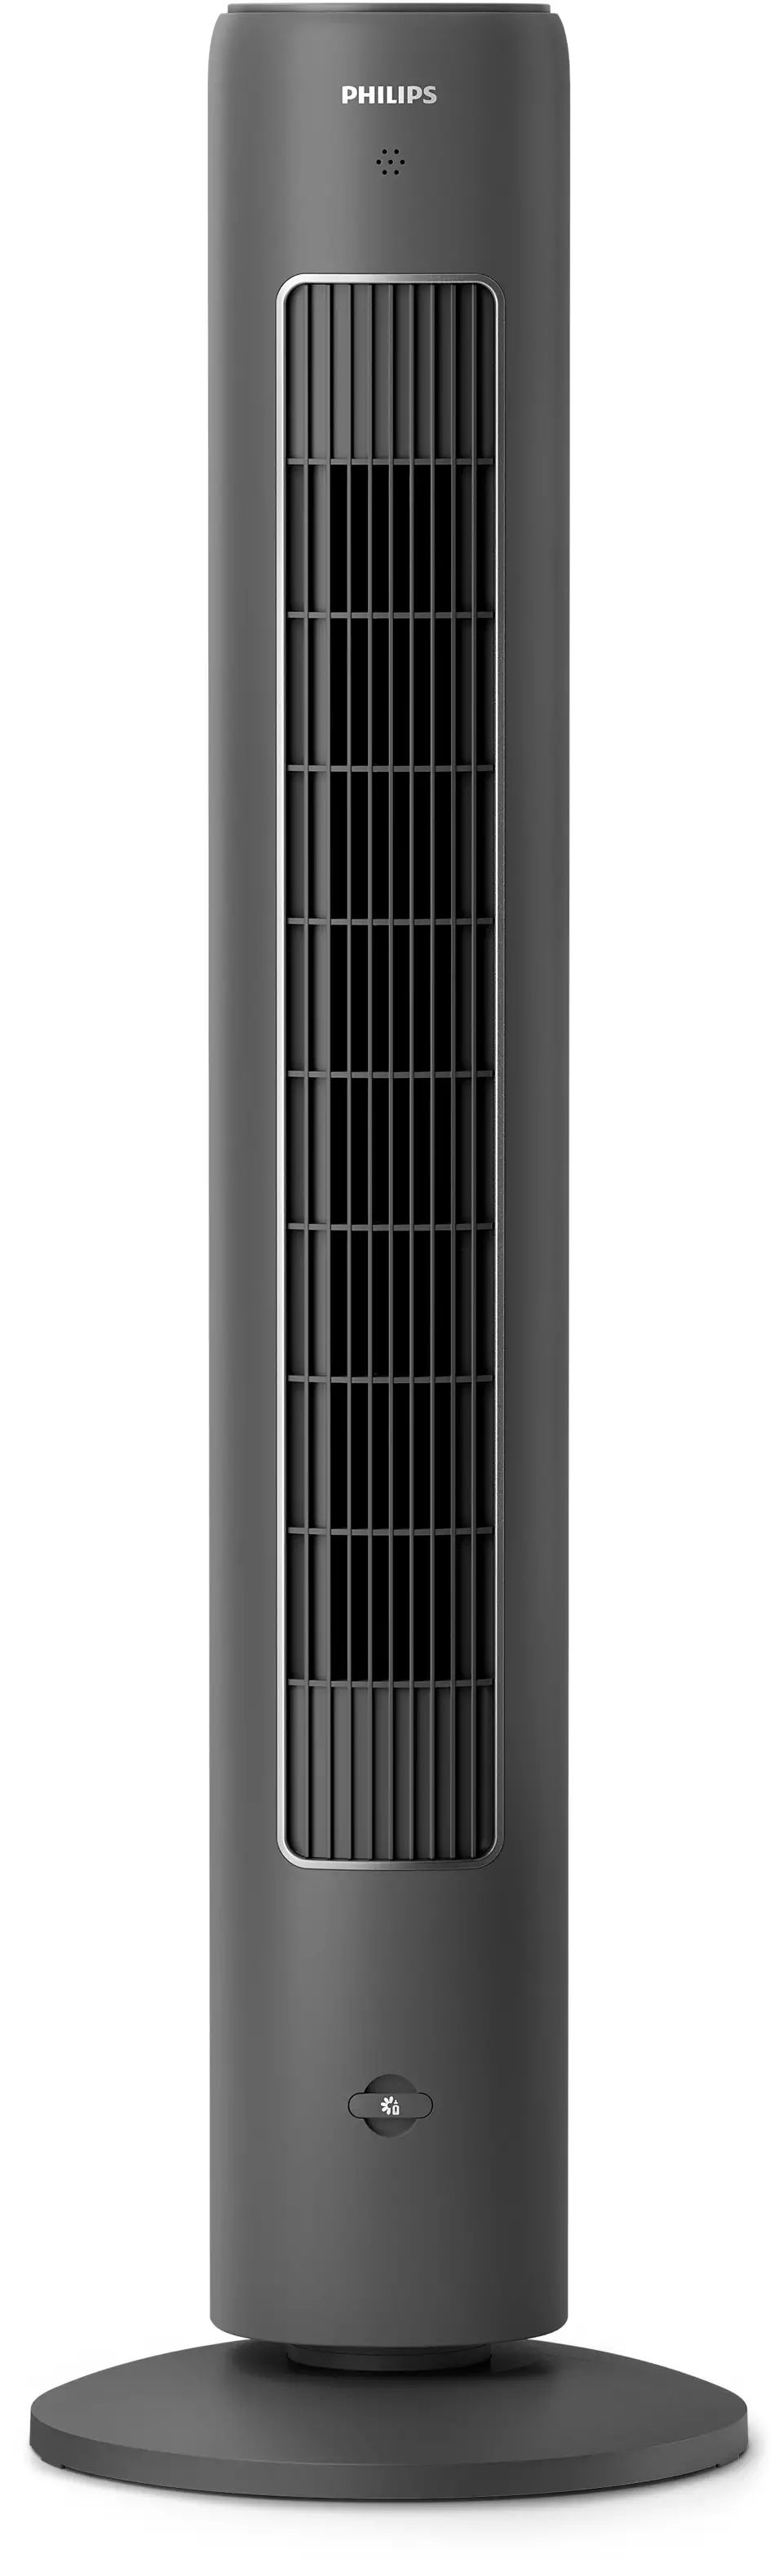 Вентилятор Philips CX5535/11 цена 4422.60 грн - фотография 2